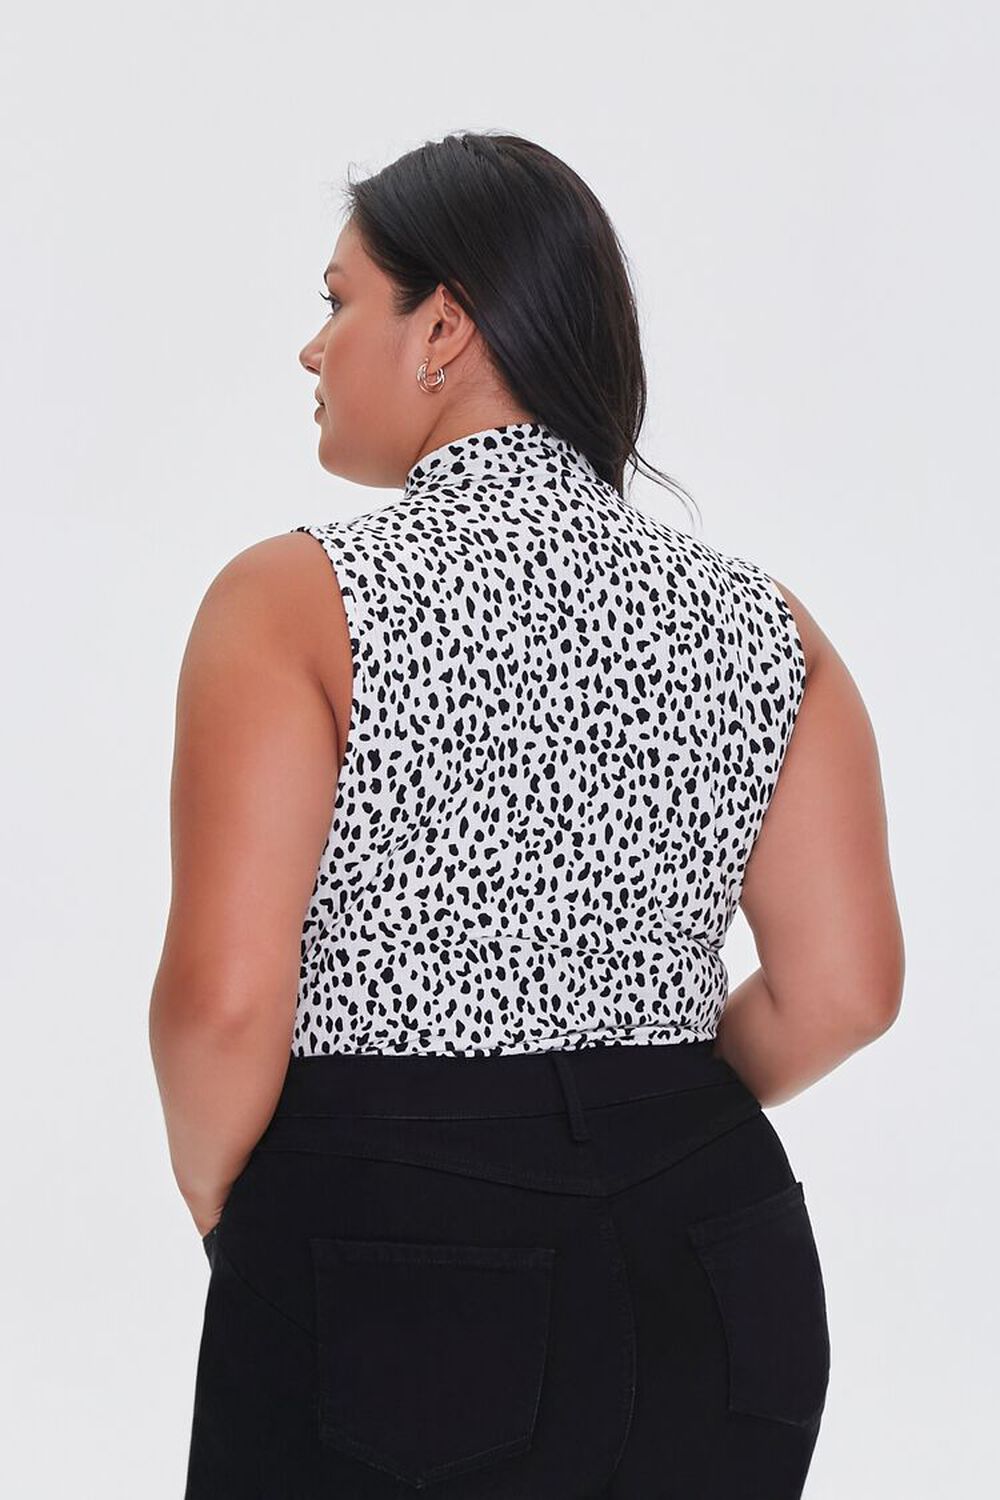 CREAM/BLACK Plus Size Cheetah Print Bodysuit, image 3